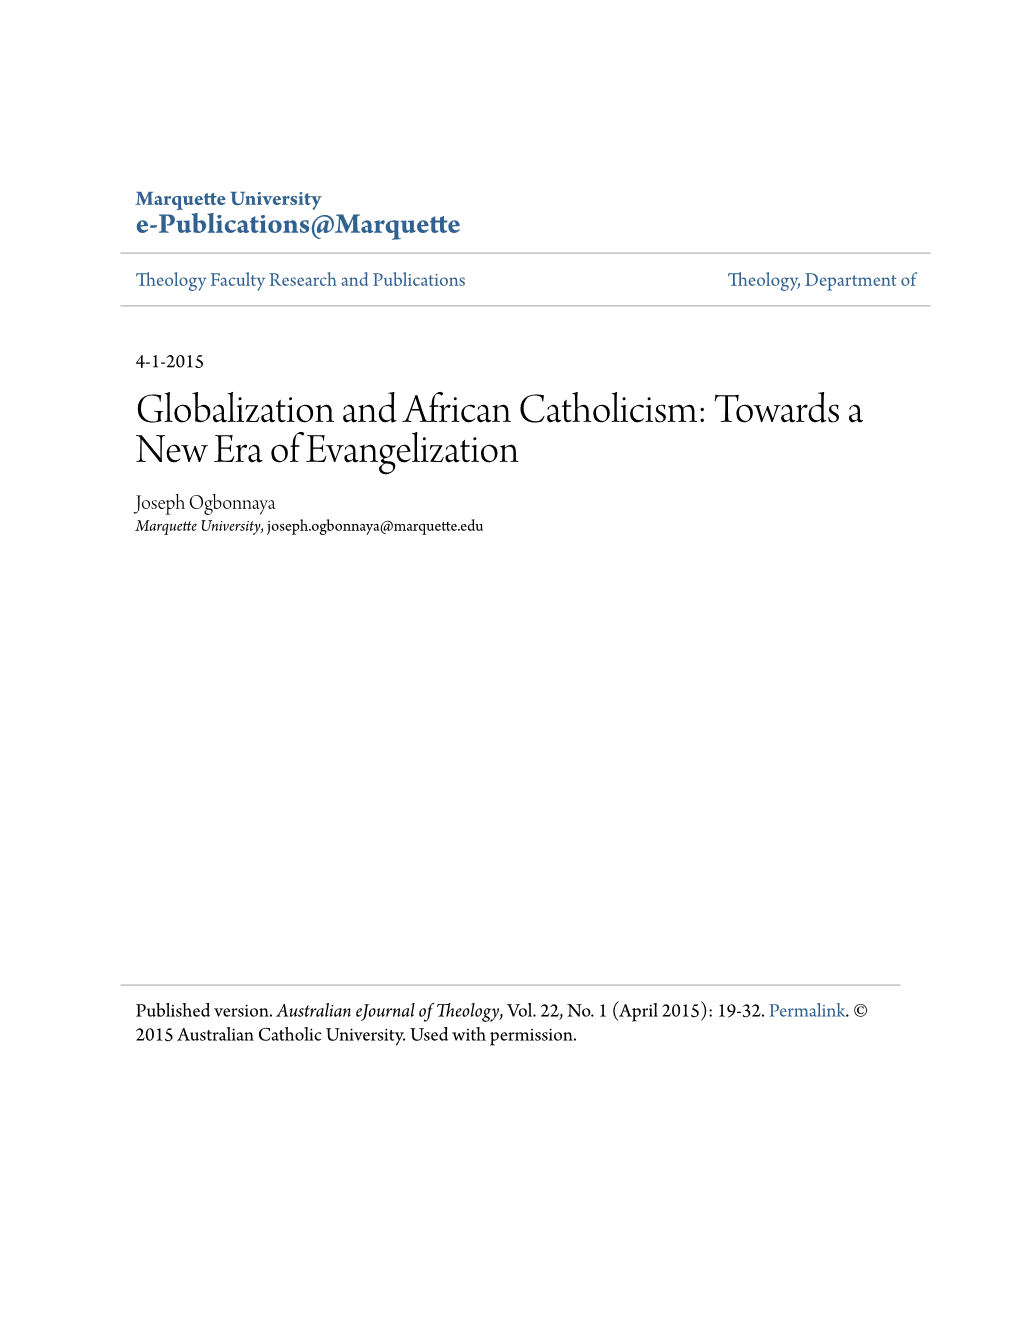 Globalization and African Catholicism: Towards a New Era of Evangelization Joseph Ogbonnaya Marquette University, Joseph.Ogbonnaya@Marquette.Edu